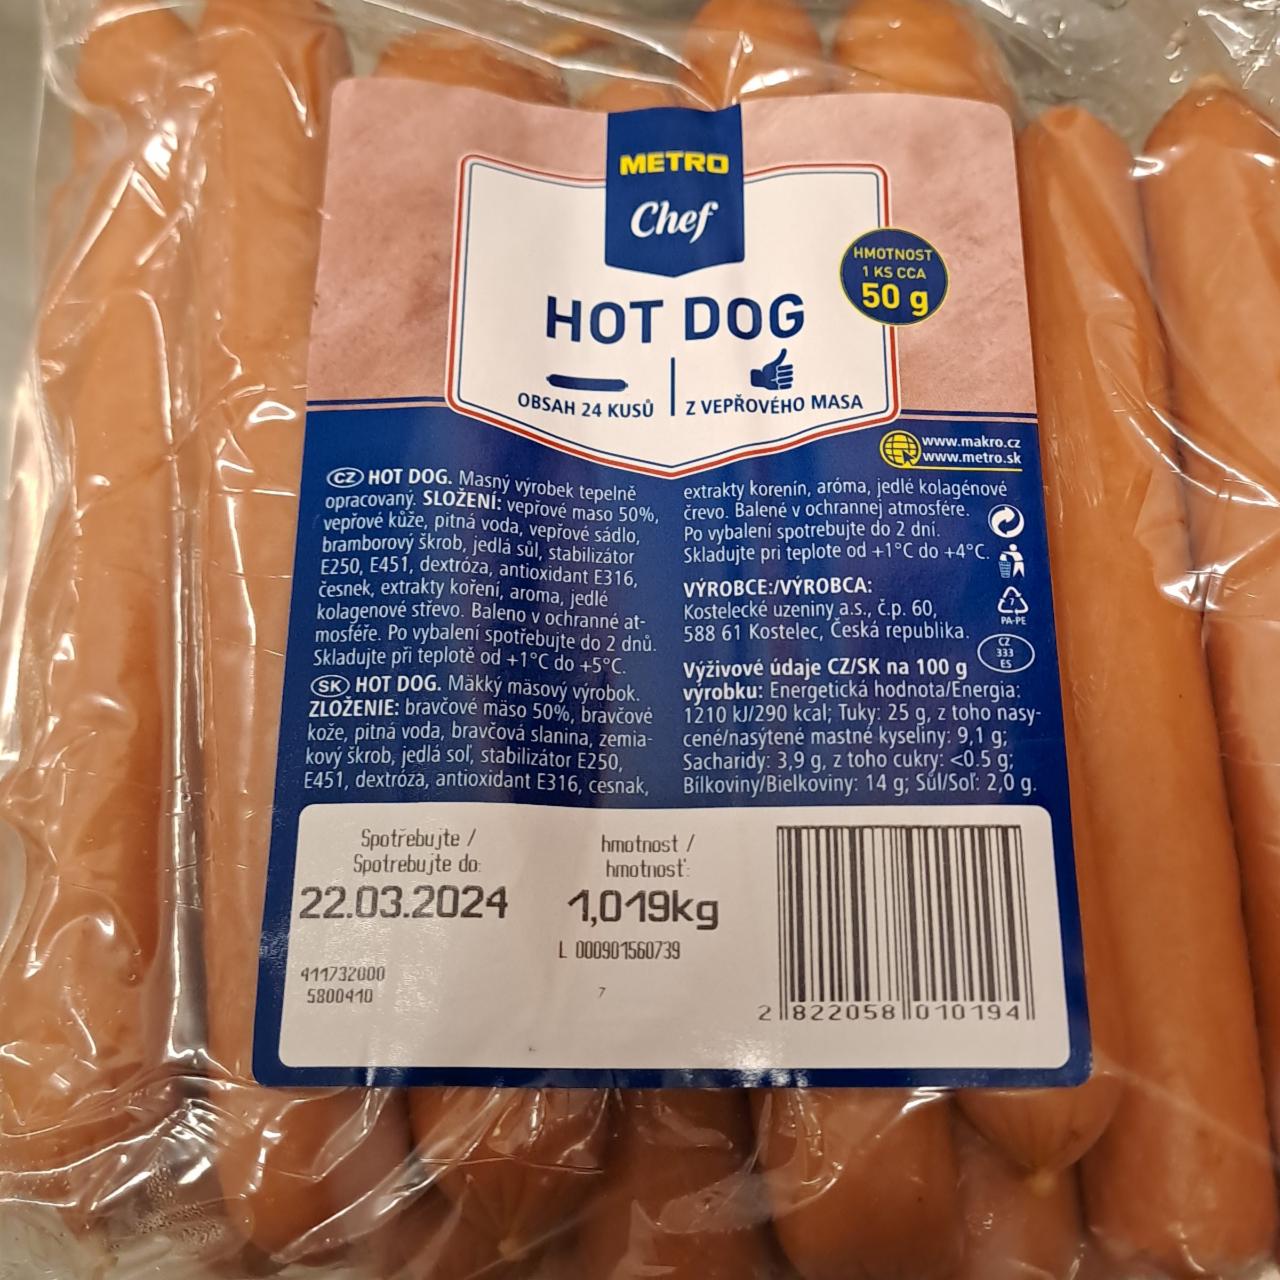 Fotografie - Hot Dog Metro Chef